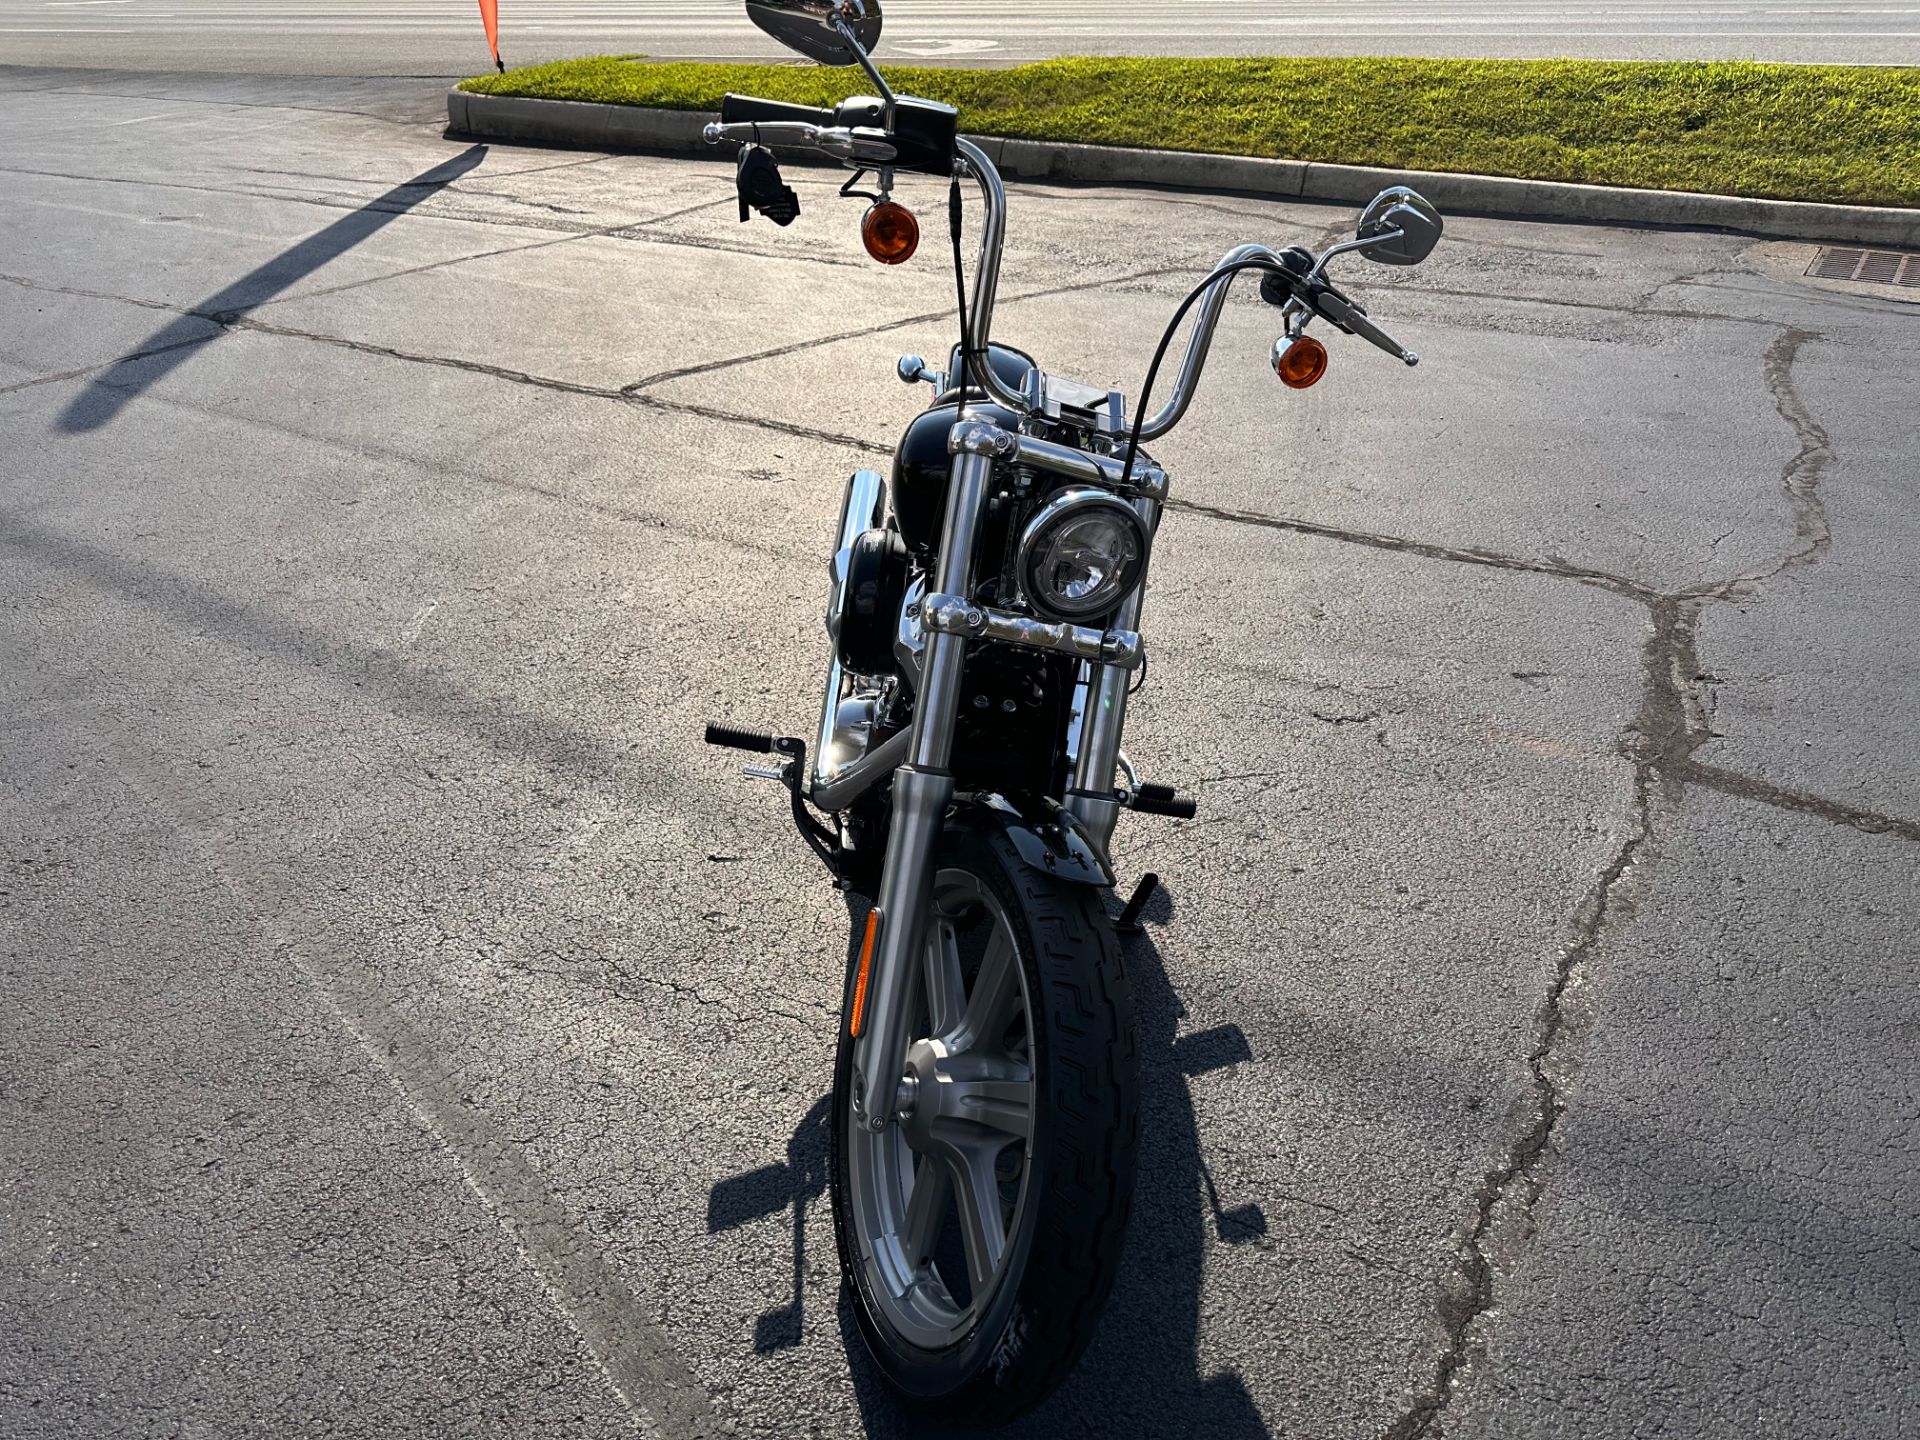 2023 Harley-Davidson Softail® Standard in Lynchburg, Virginia - Photo 2